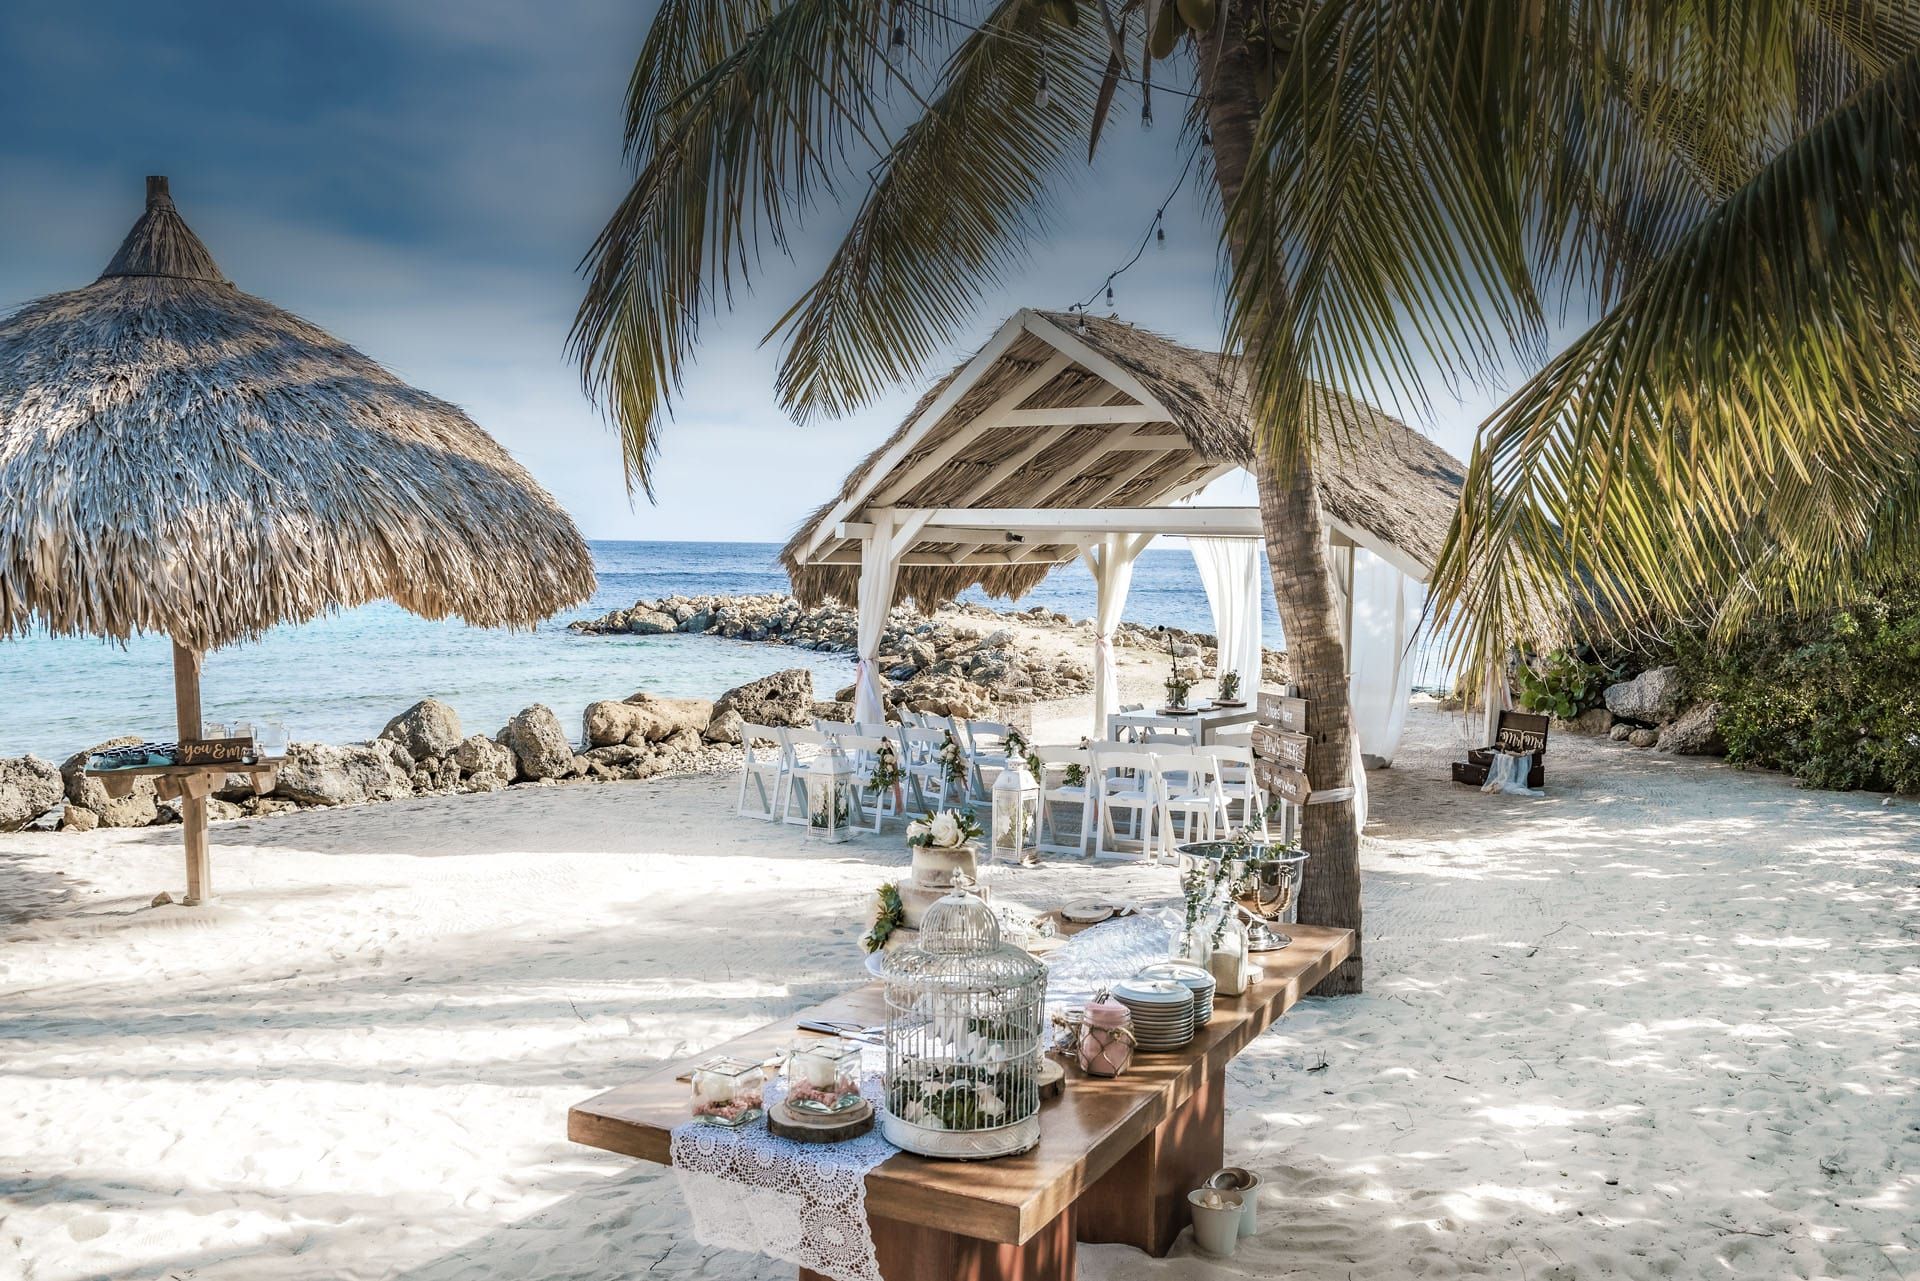 Getting married on the ABC islands, Aruba Bonaire Curacao, wedding location